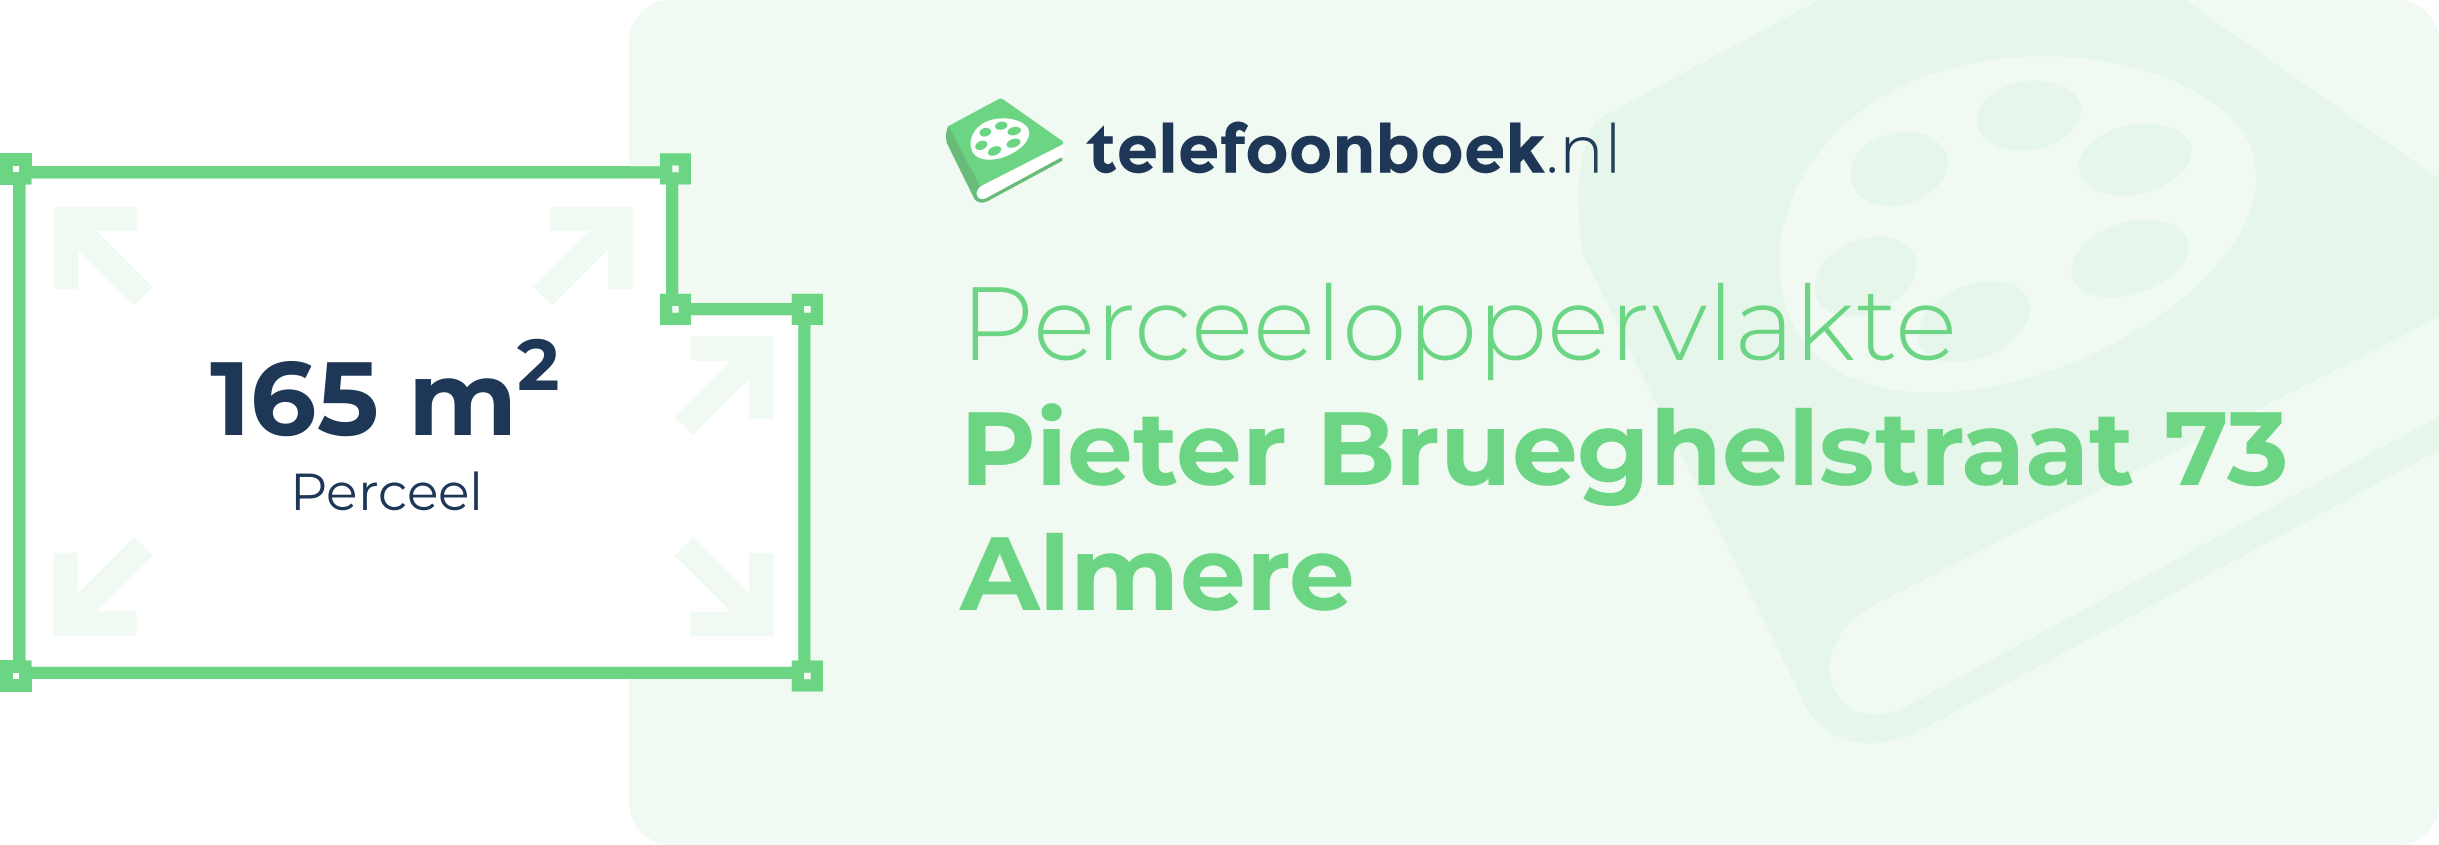 Perceeloppervlakte Pieter Brueghelstraat 73 Almere